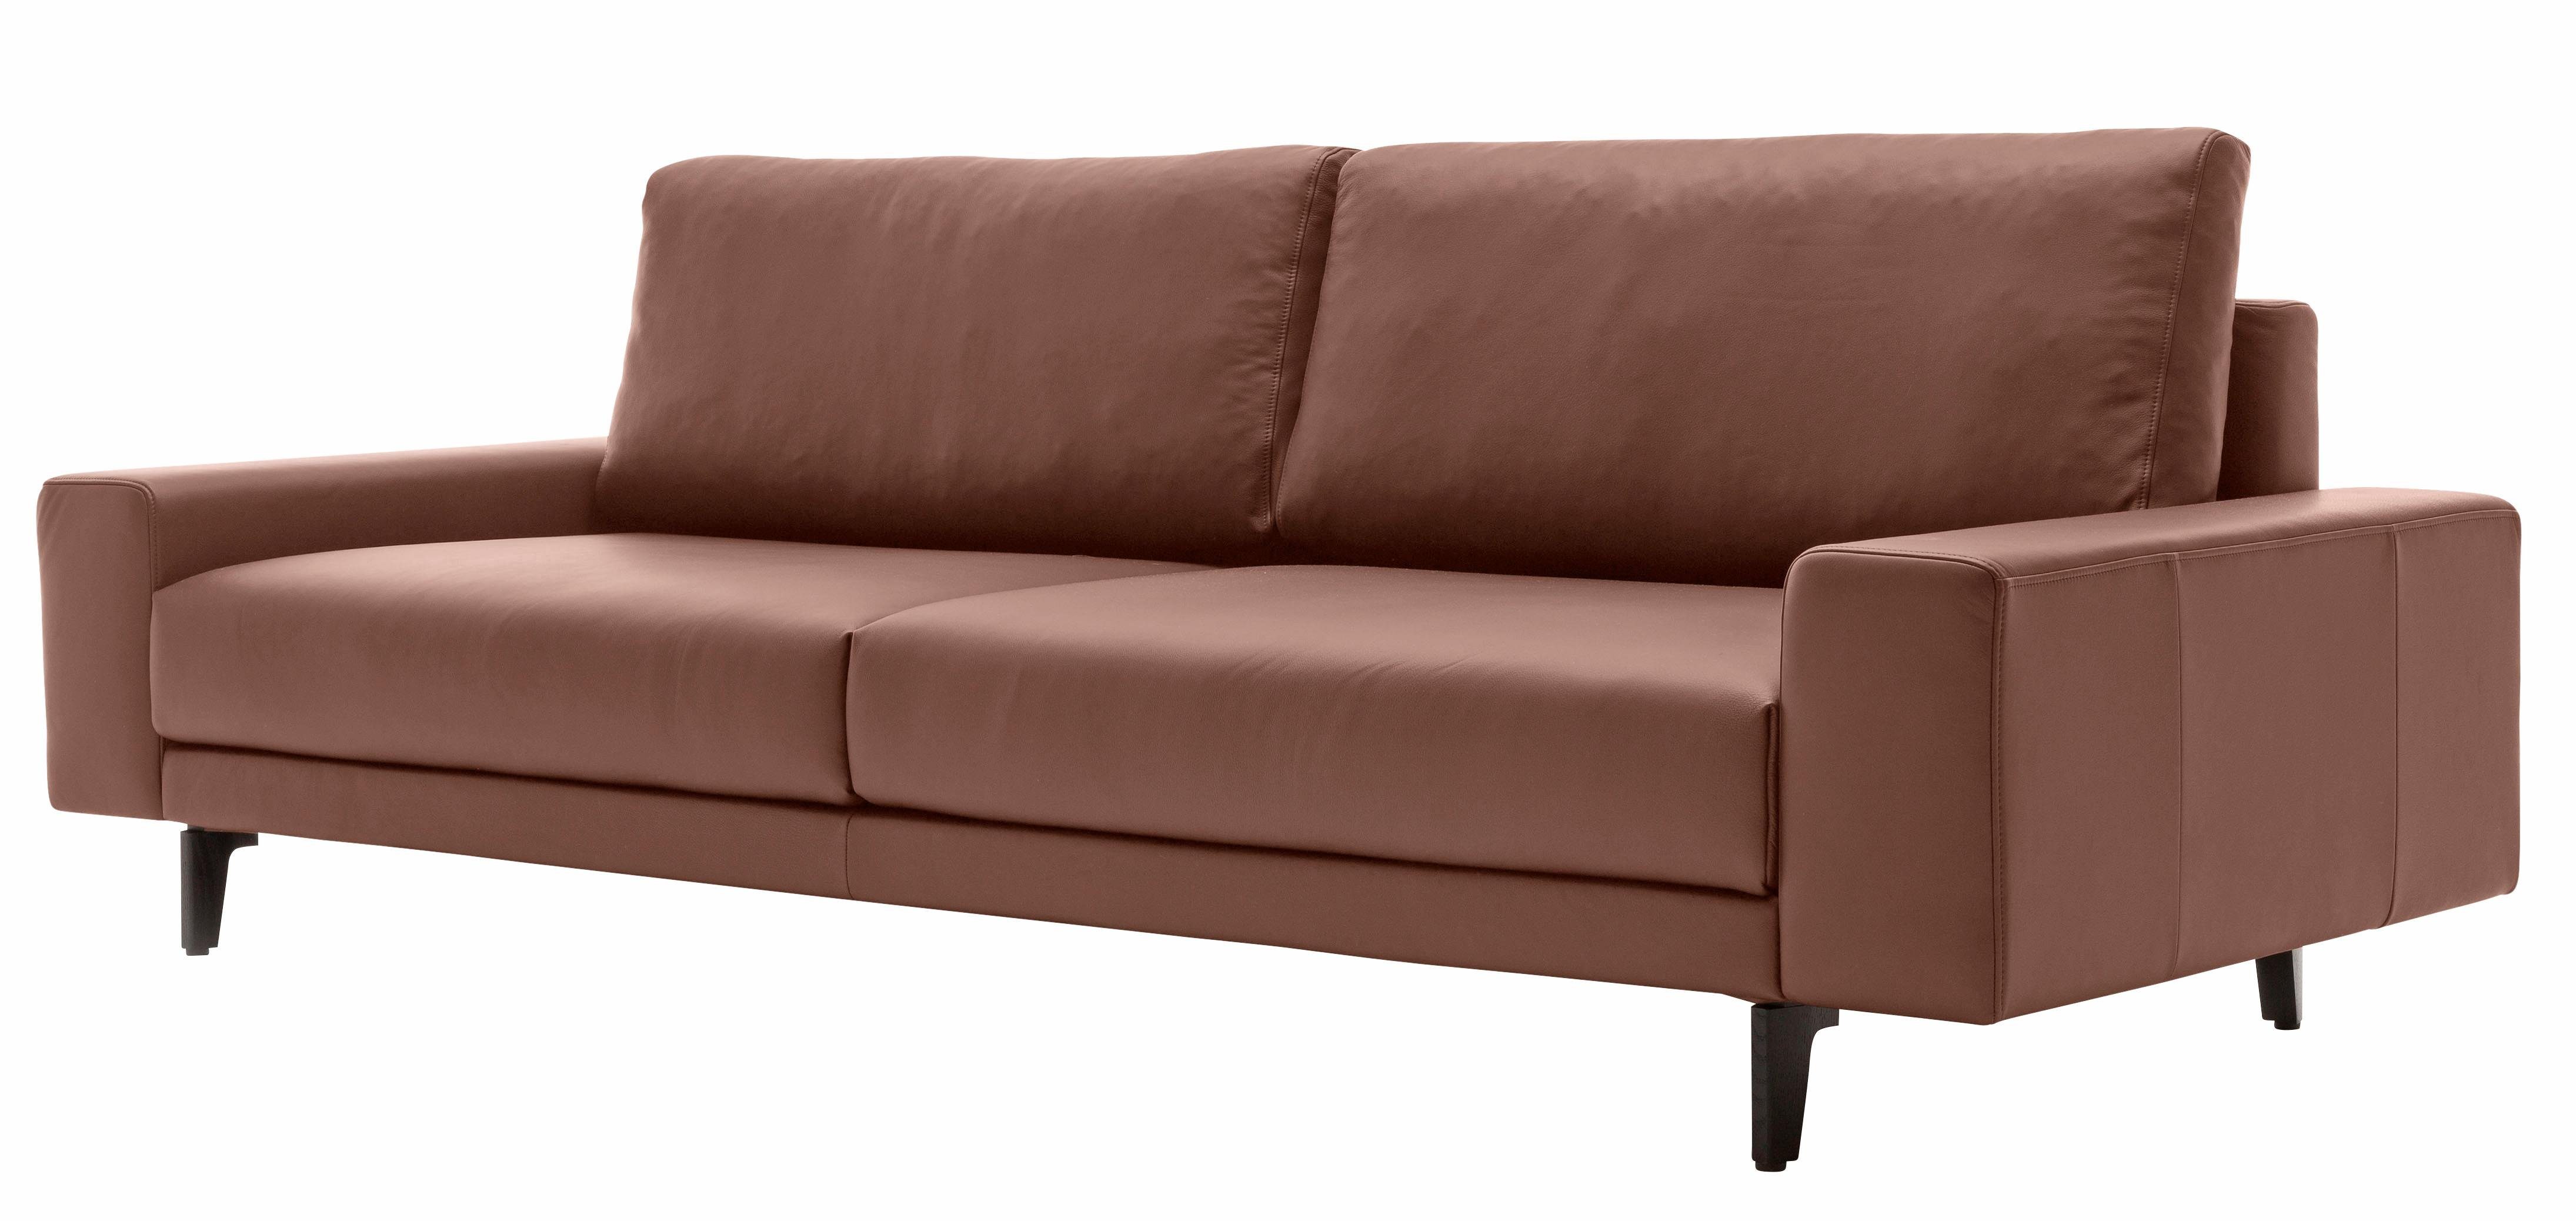 3-Sitzer hs.450, Breite sofa 220 cm umbragrau, niedrig, in breit Alugussfüße hülsta Armlehne